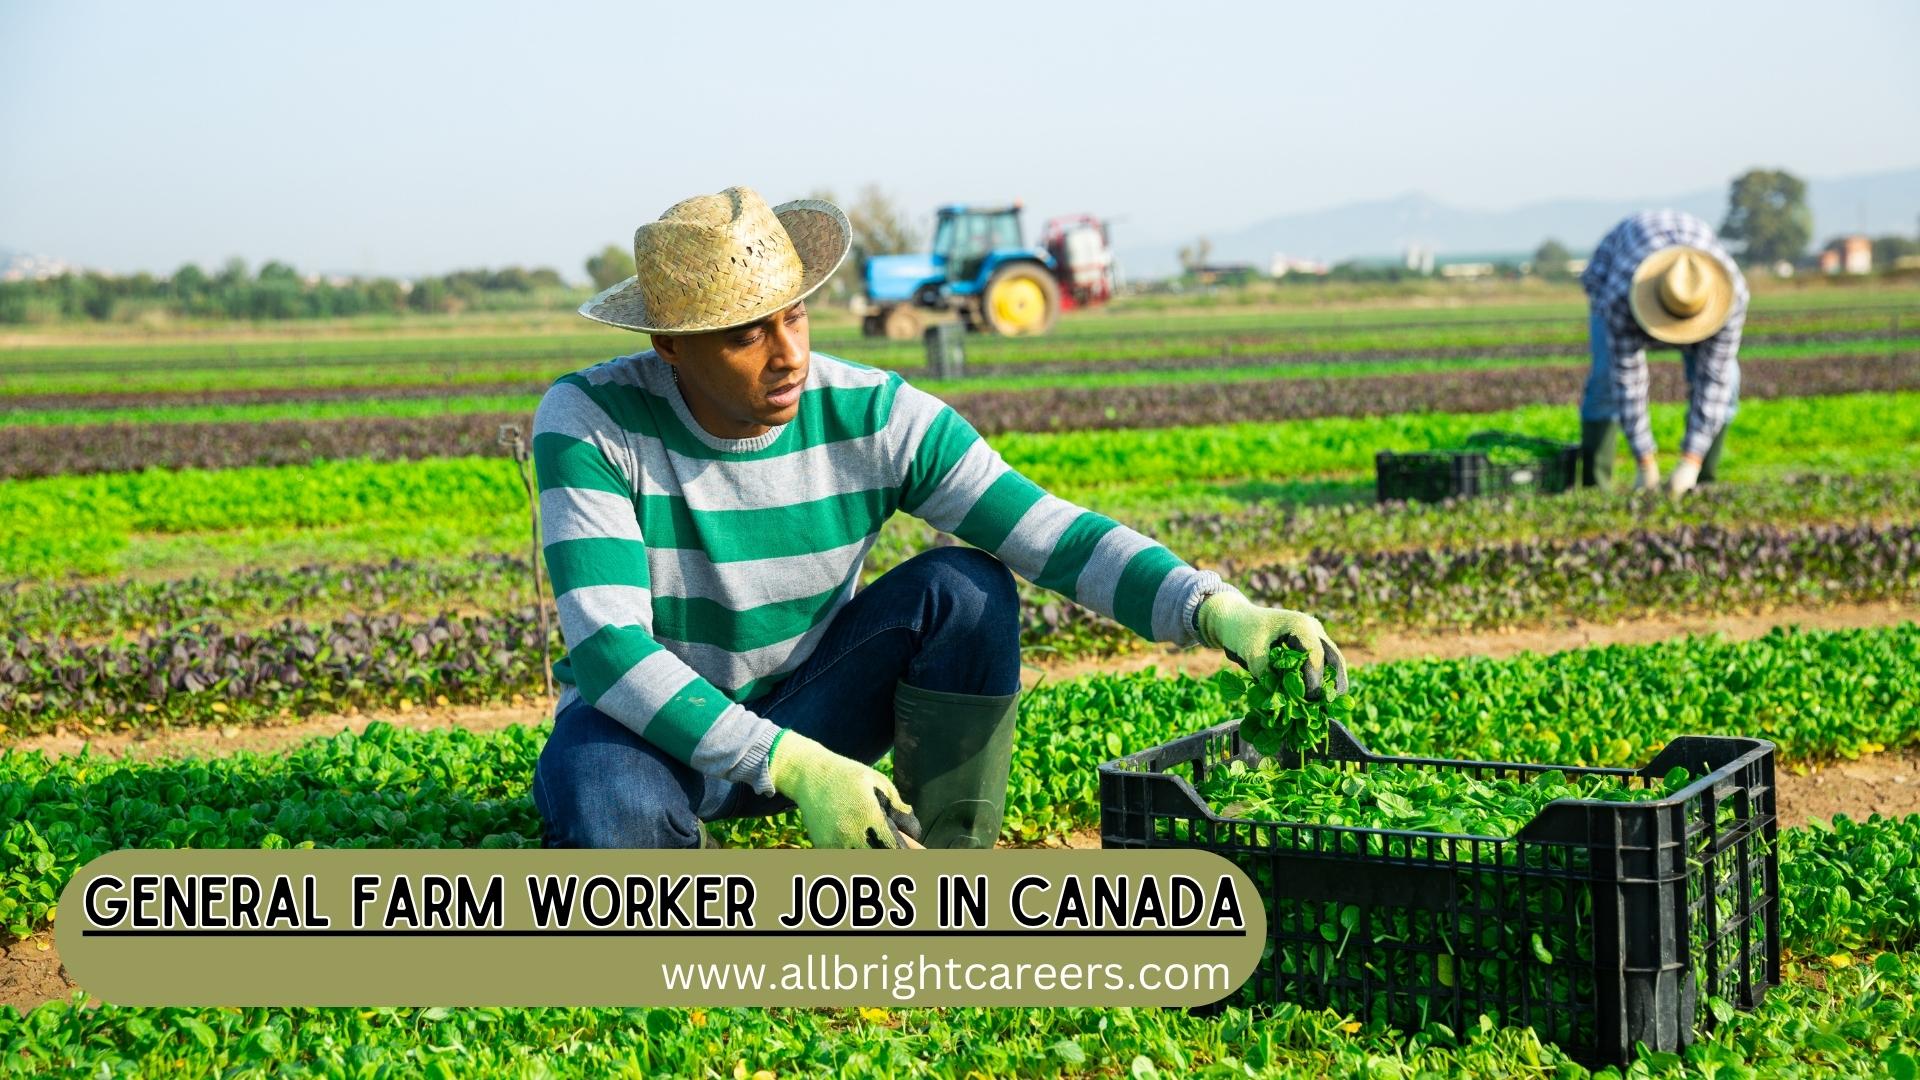 General Farm Worker Jobs in Canada